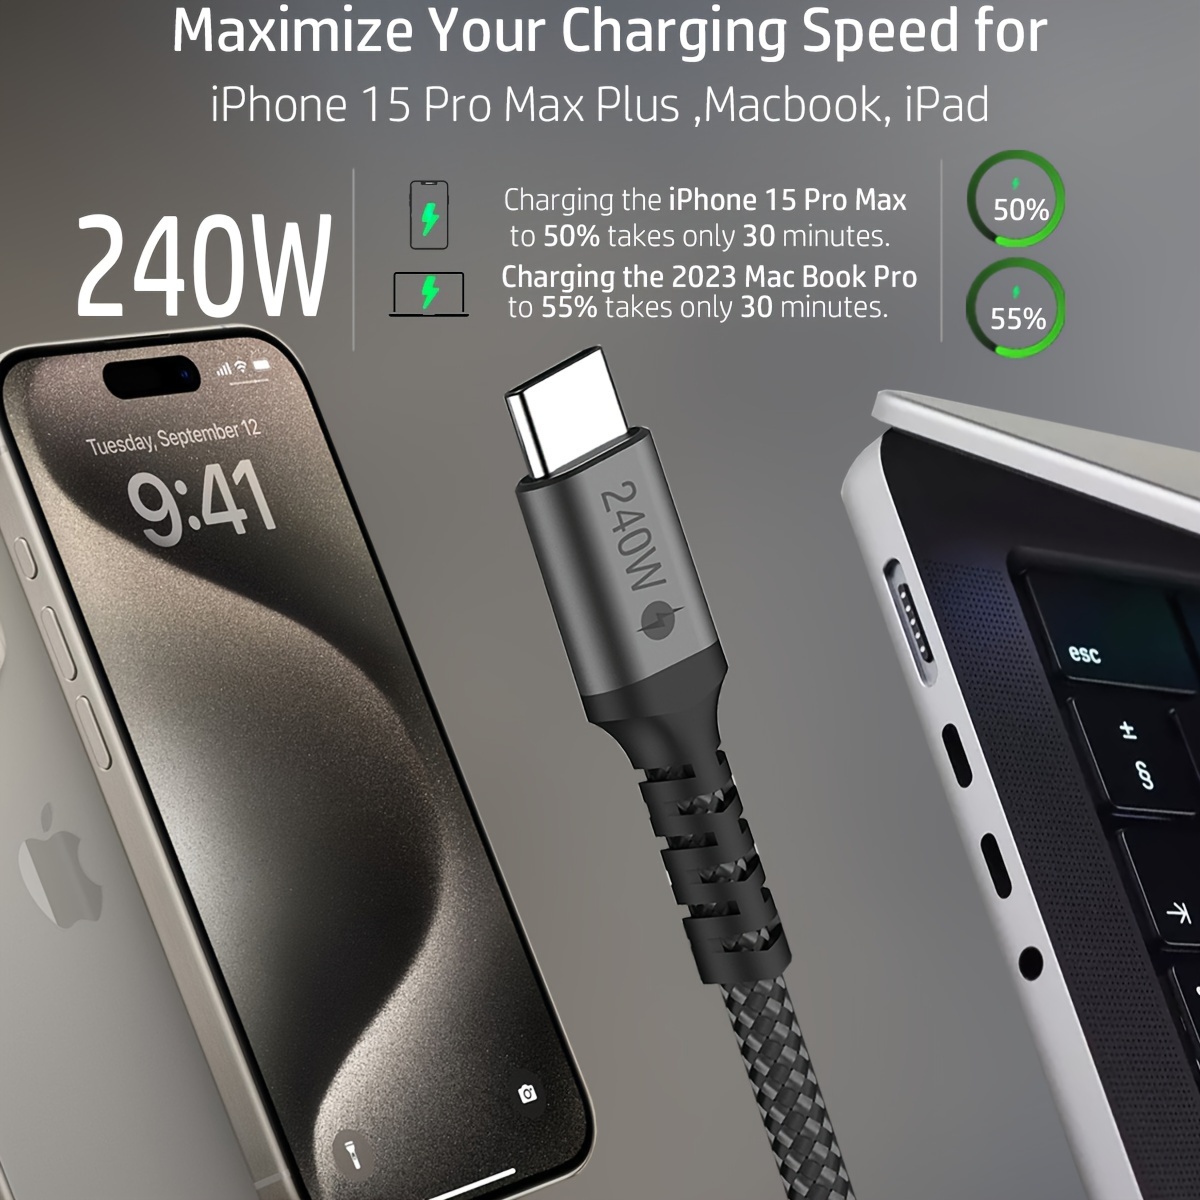 USB Type-Cケーブル iPhone15 ケーブル Type-C USB 充電器 高速充電 データ転送 Xperia XZ X compact  Nexus 6P 5X 等対応 長さ0.25 0.5 1 1.5m